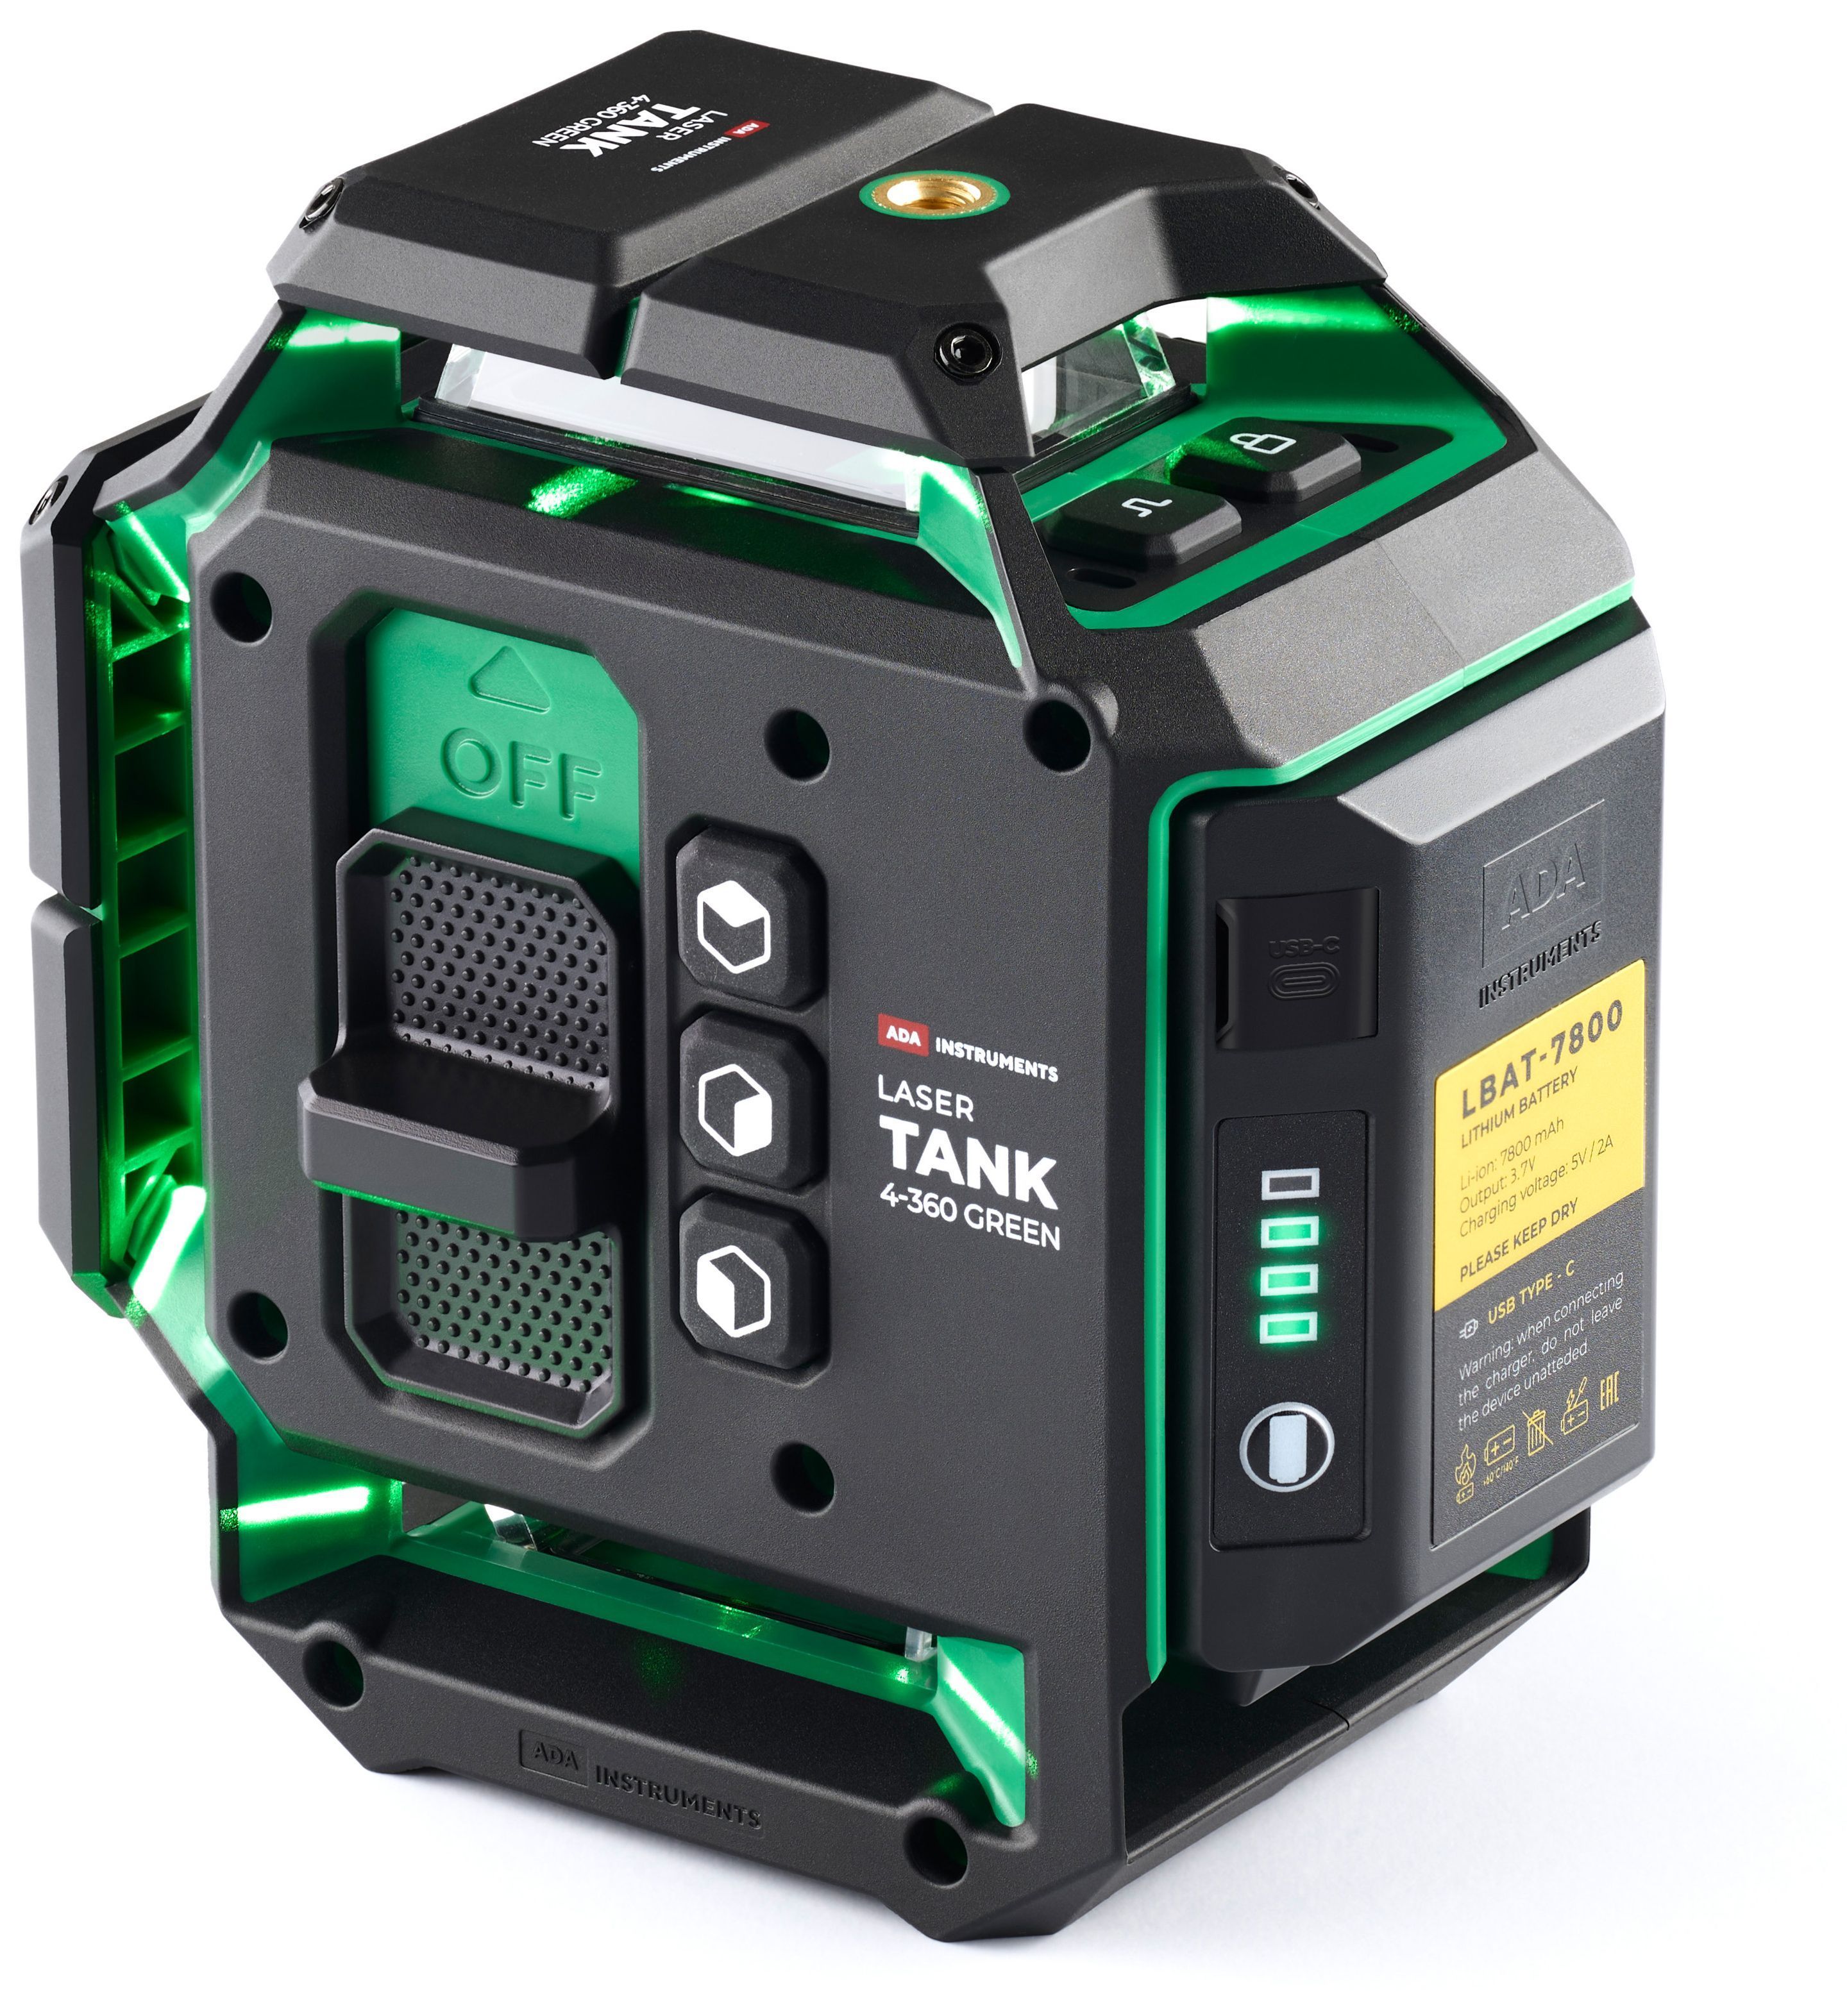 Лазерный нивелир Ada LaserTank 4-360 Green Basic Edition А00631 Ada от магазина Tehnorama